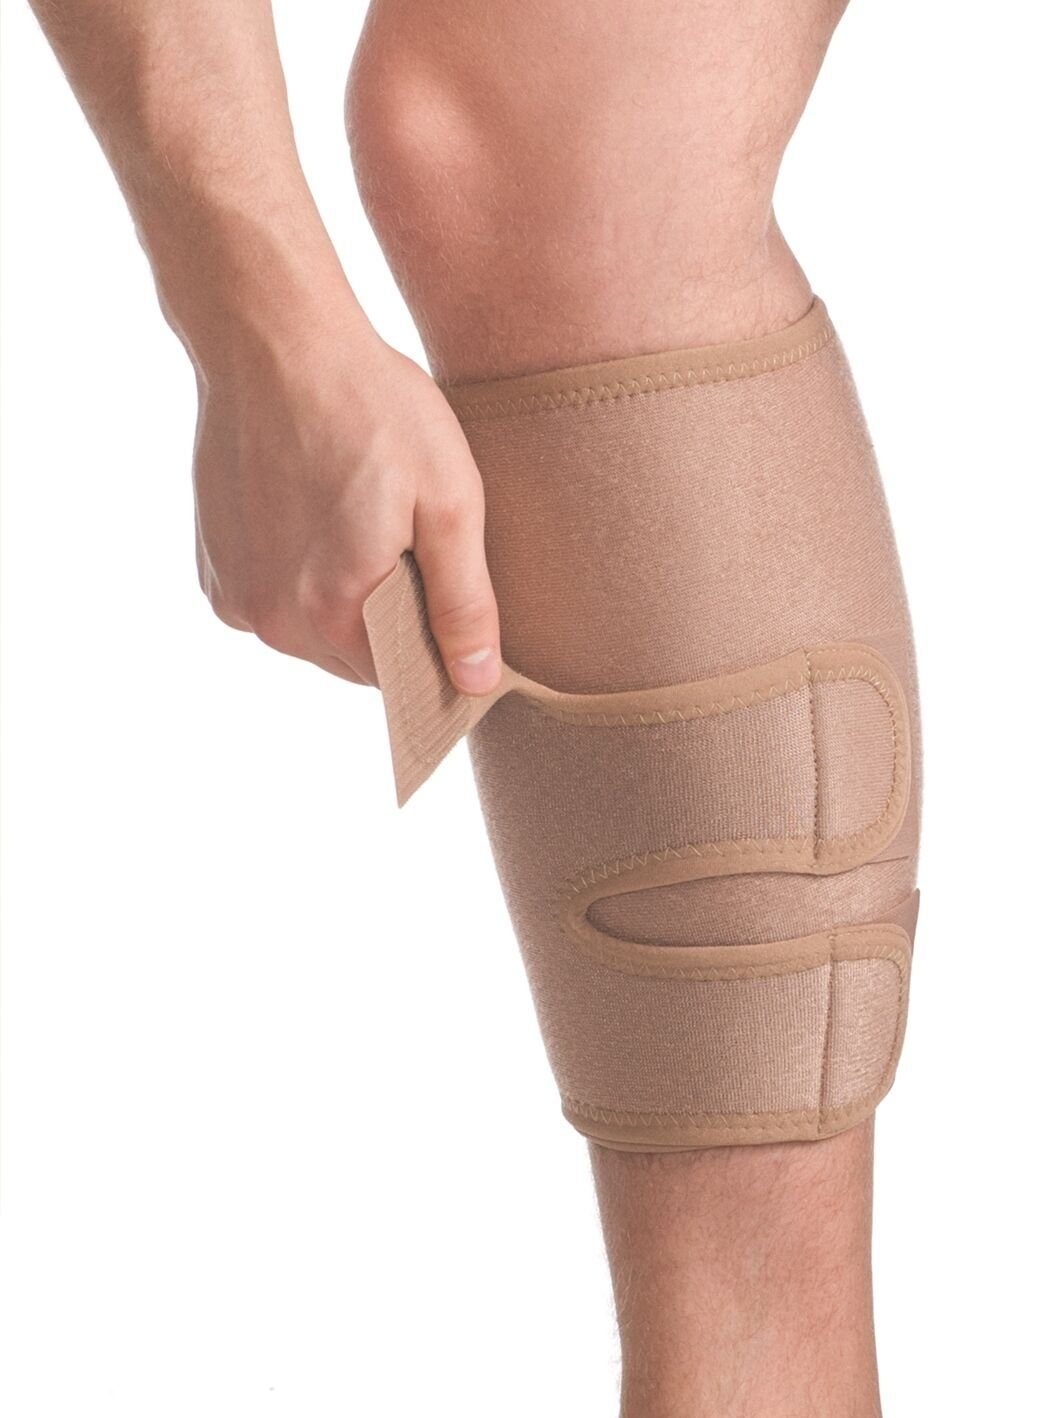 MedTex Bandage Bandage Unterschenkel Wärme Schoner Wadenmuskel 7620, Unterschenkelbandage